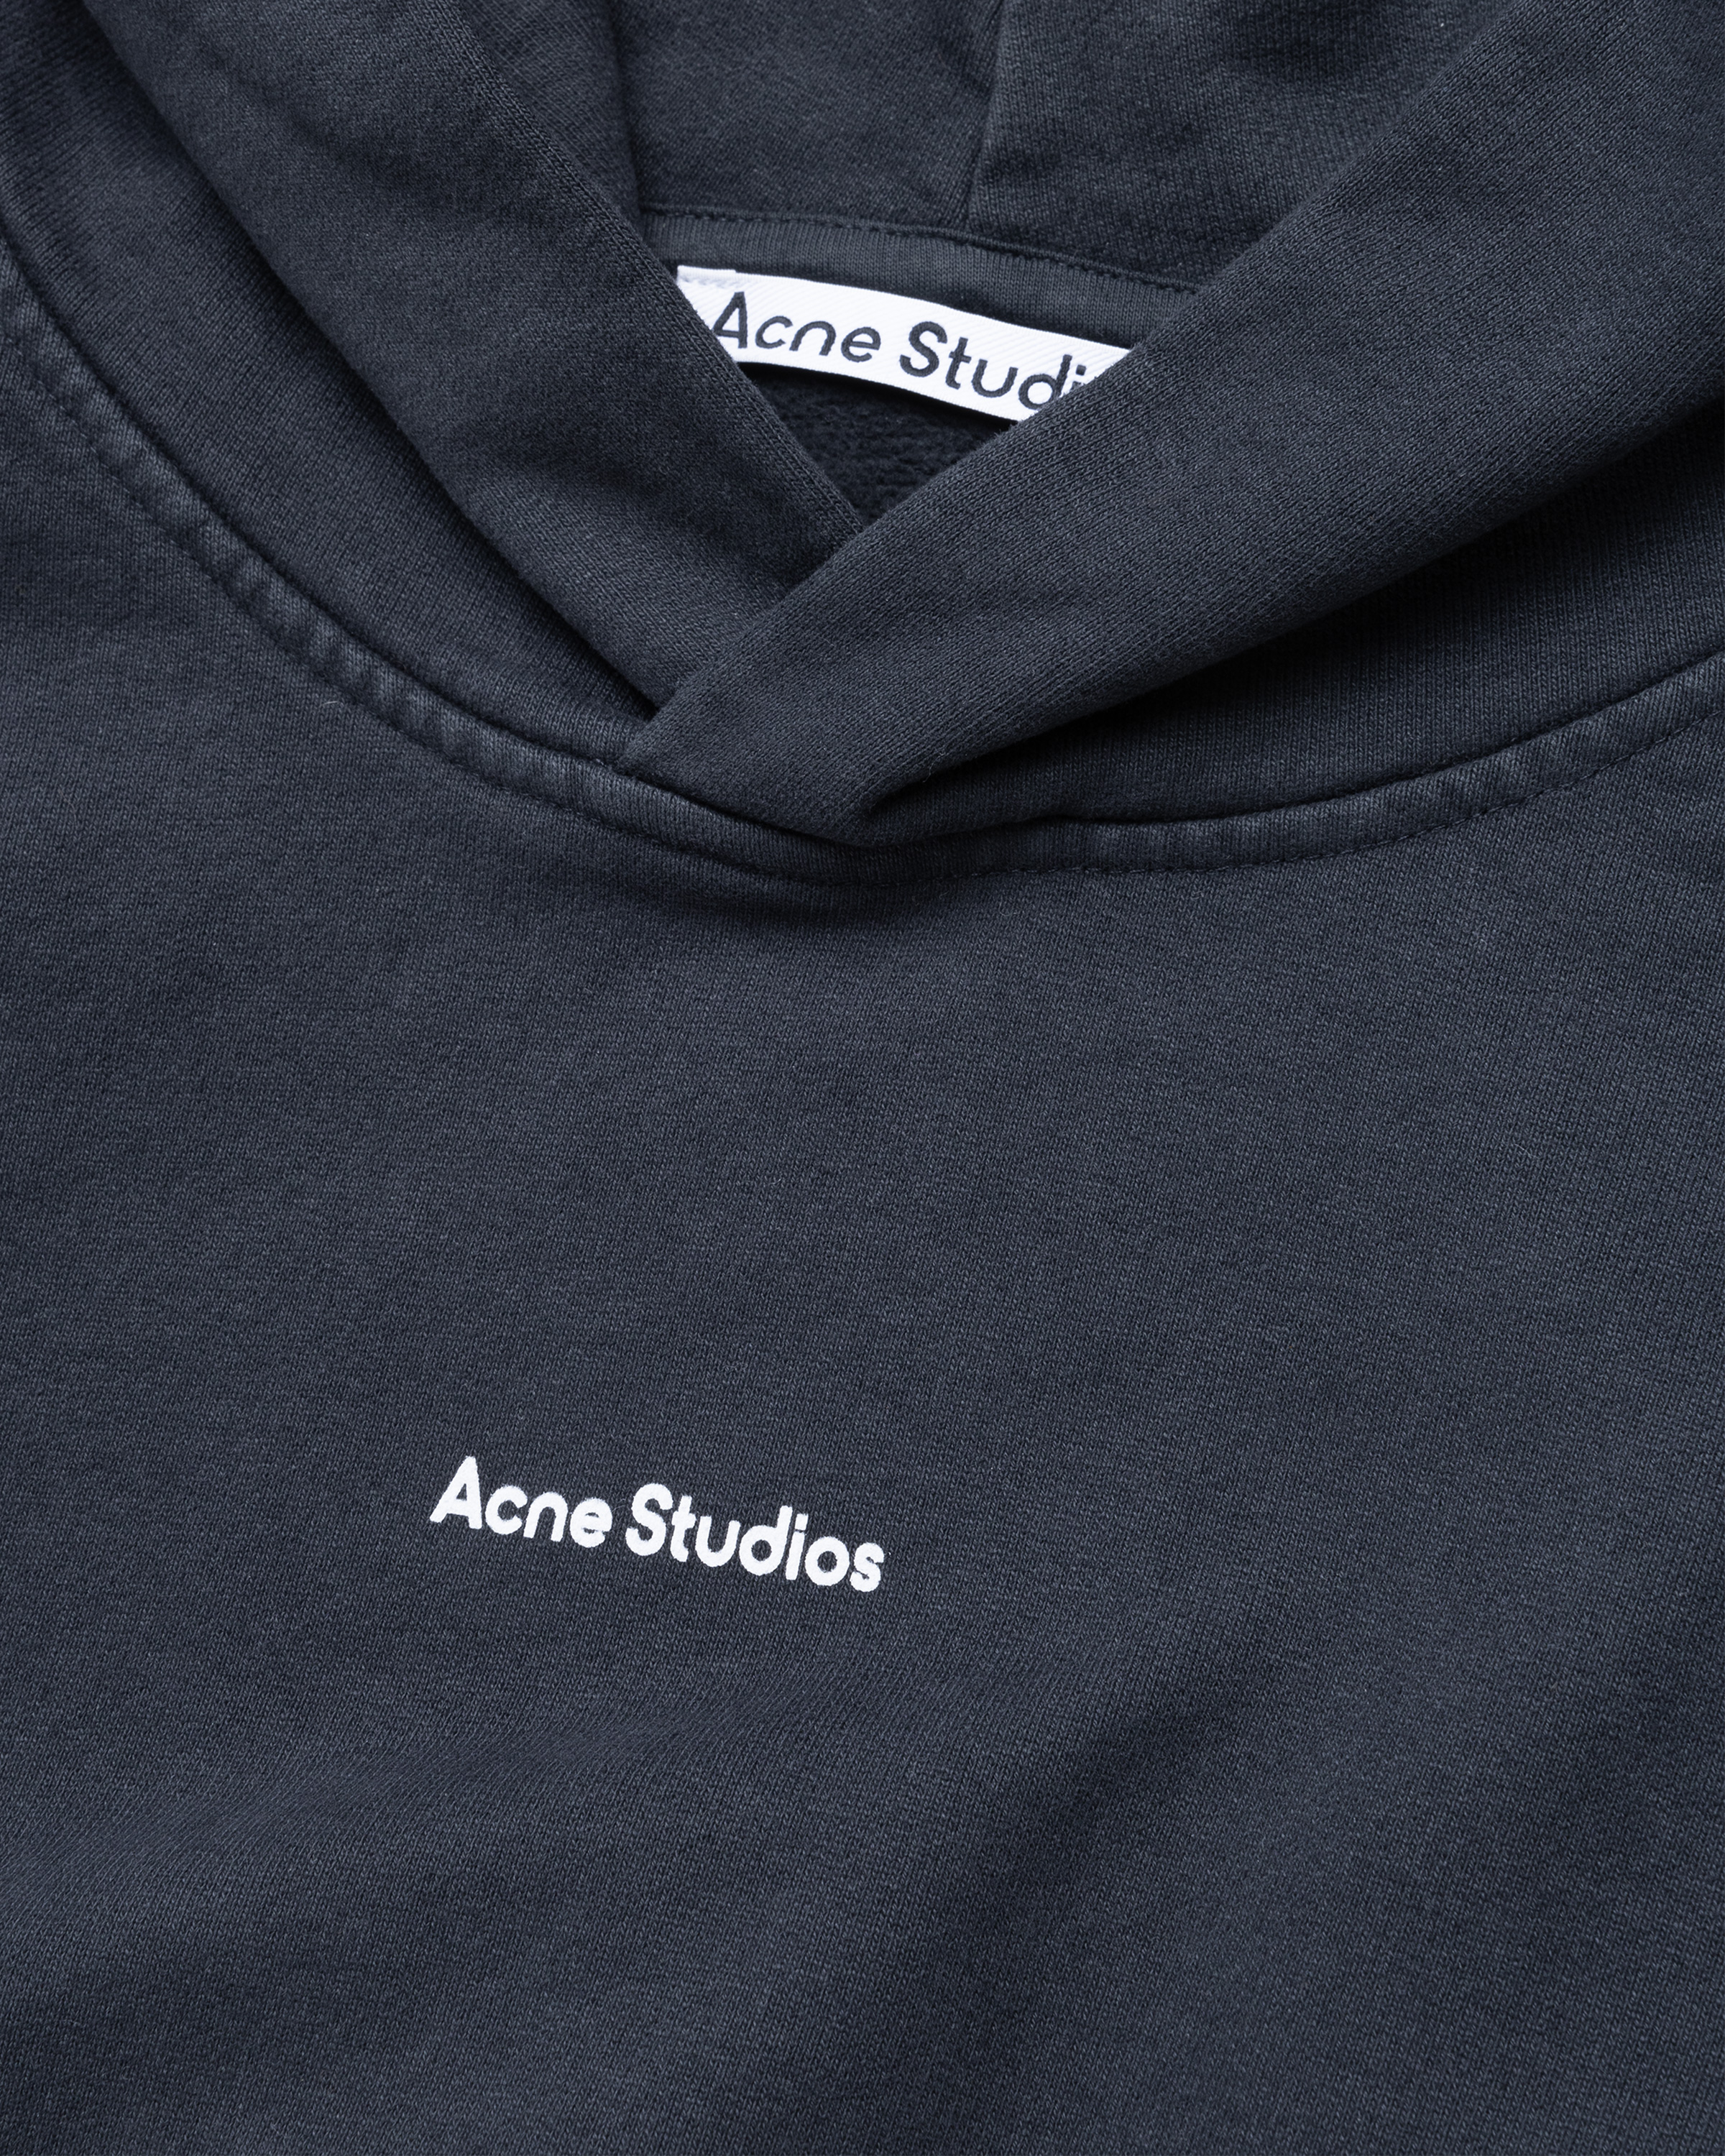 Acne Studios - Logo Hoodie Black - Clothing - Black - Image 6